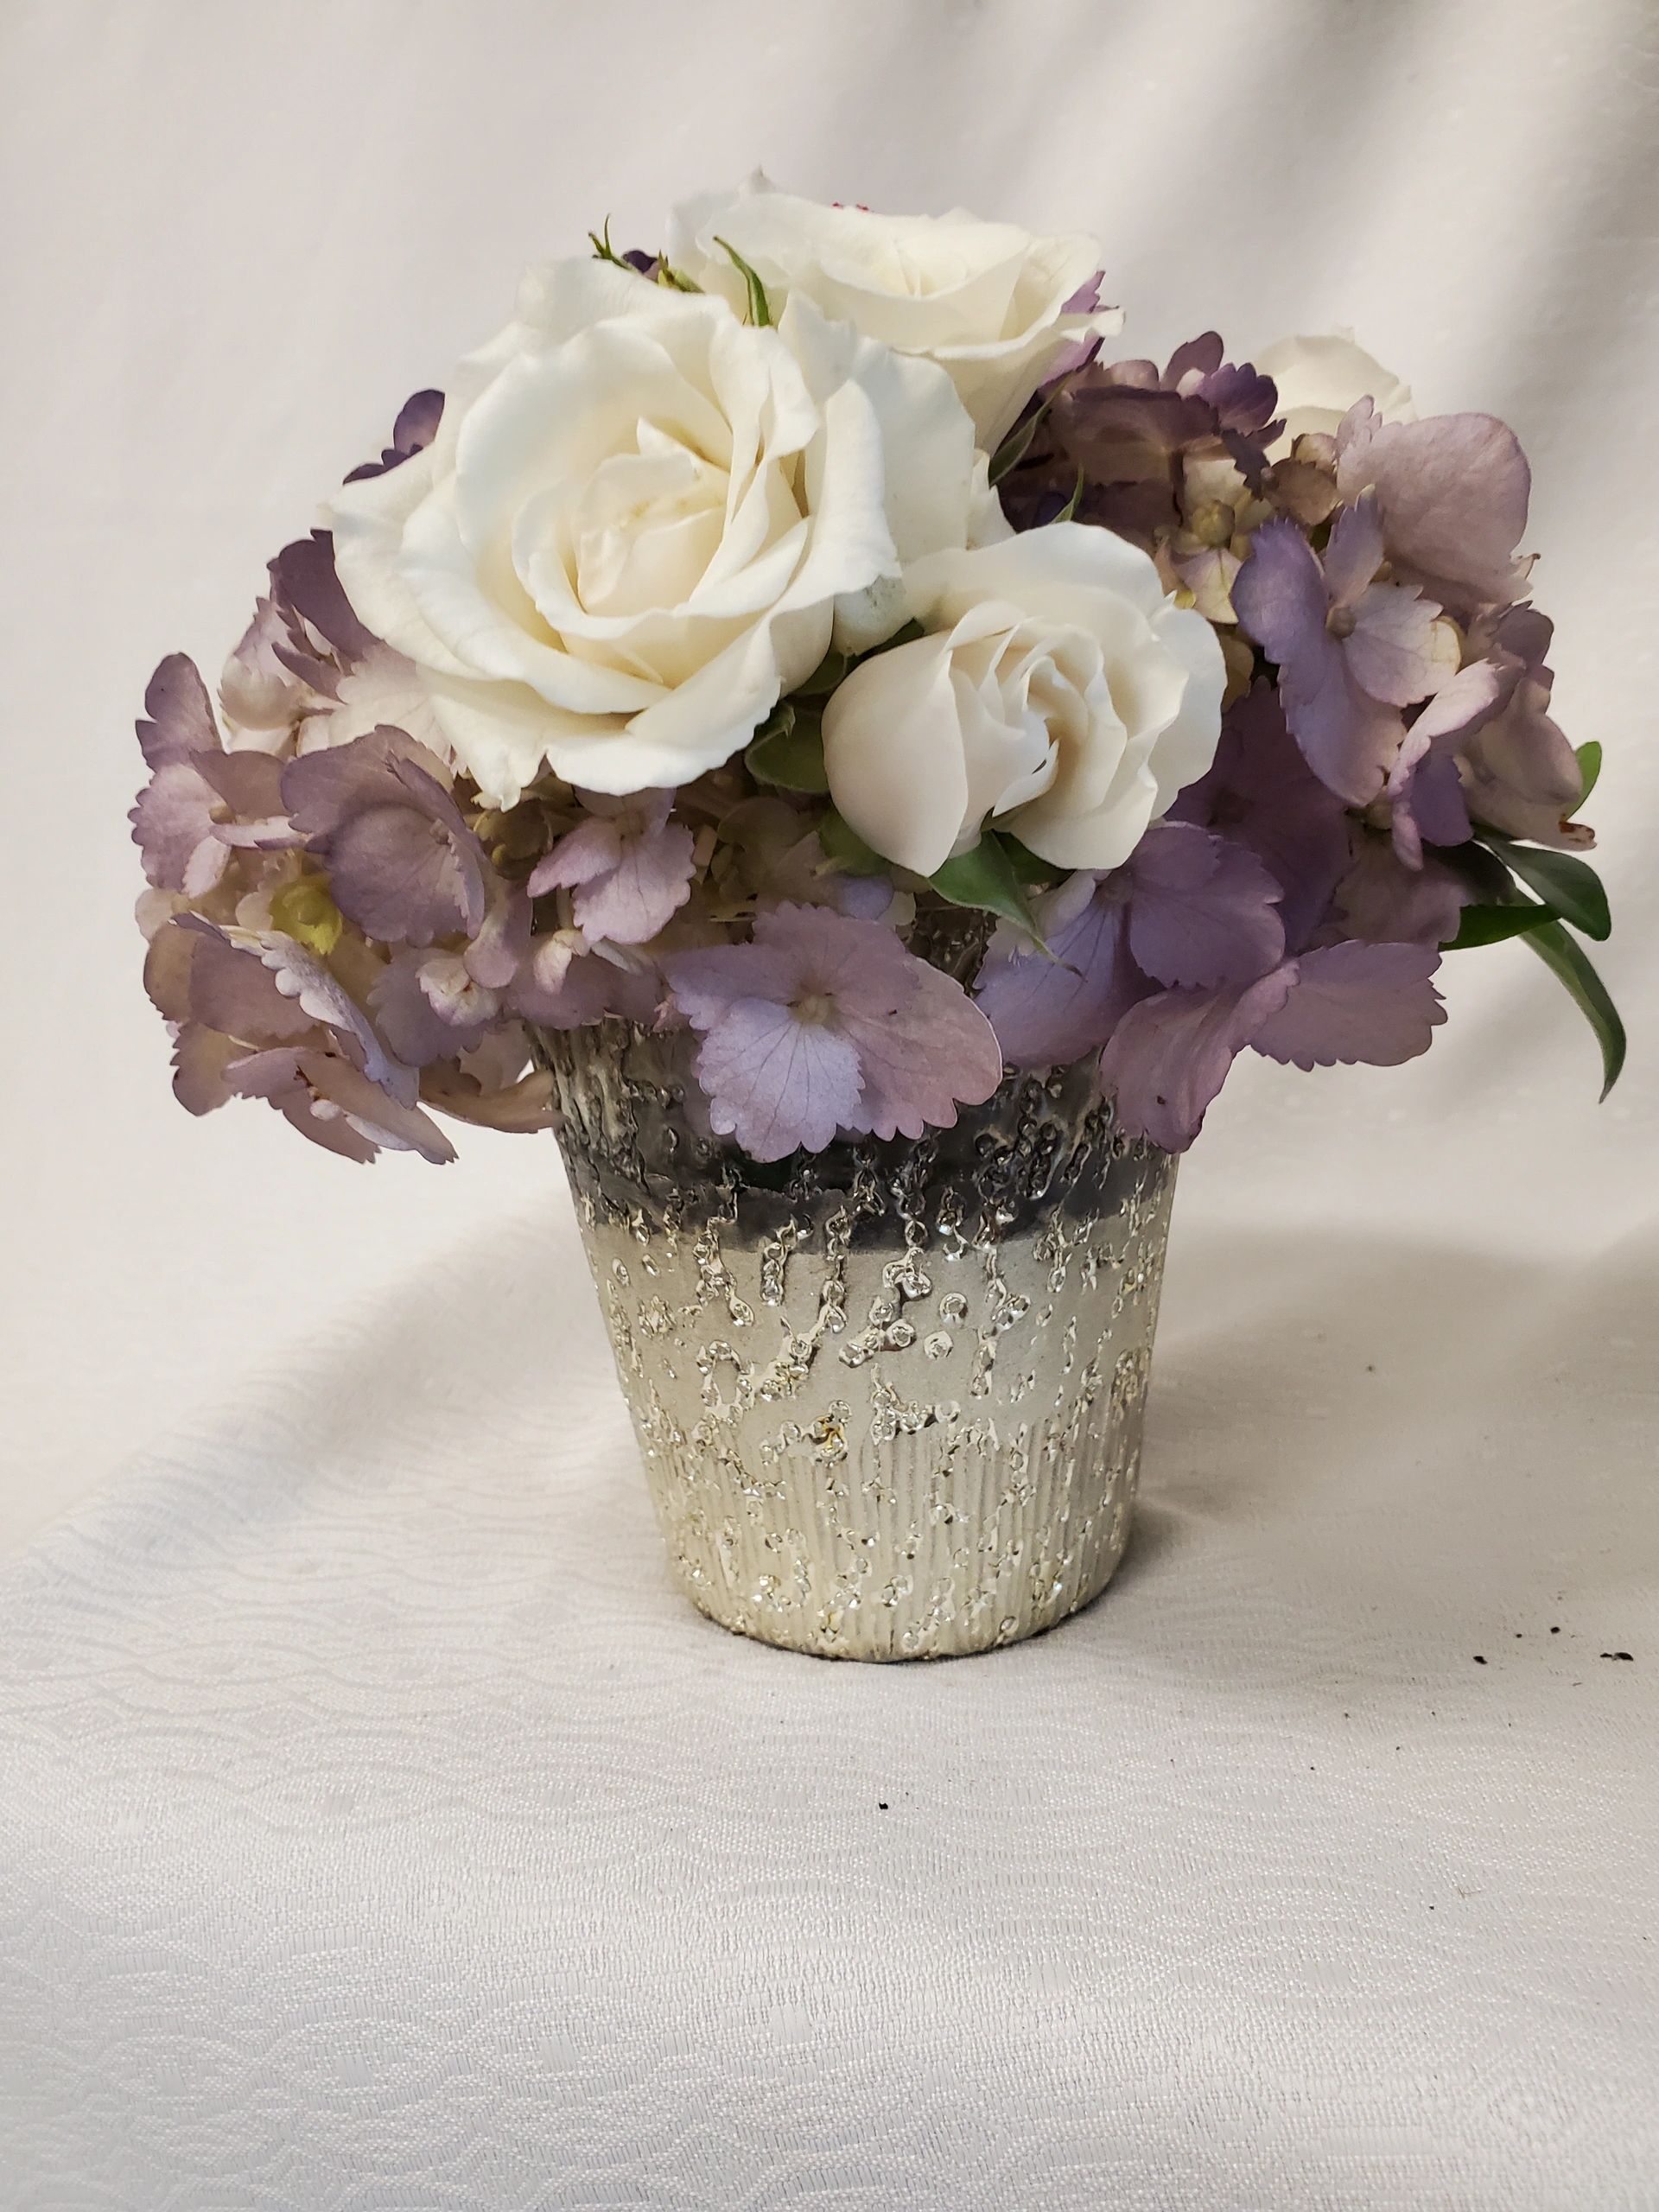 White rose and hydrangeas in an elegant vase.